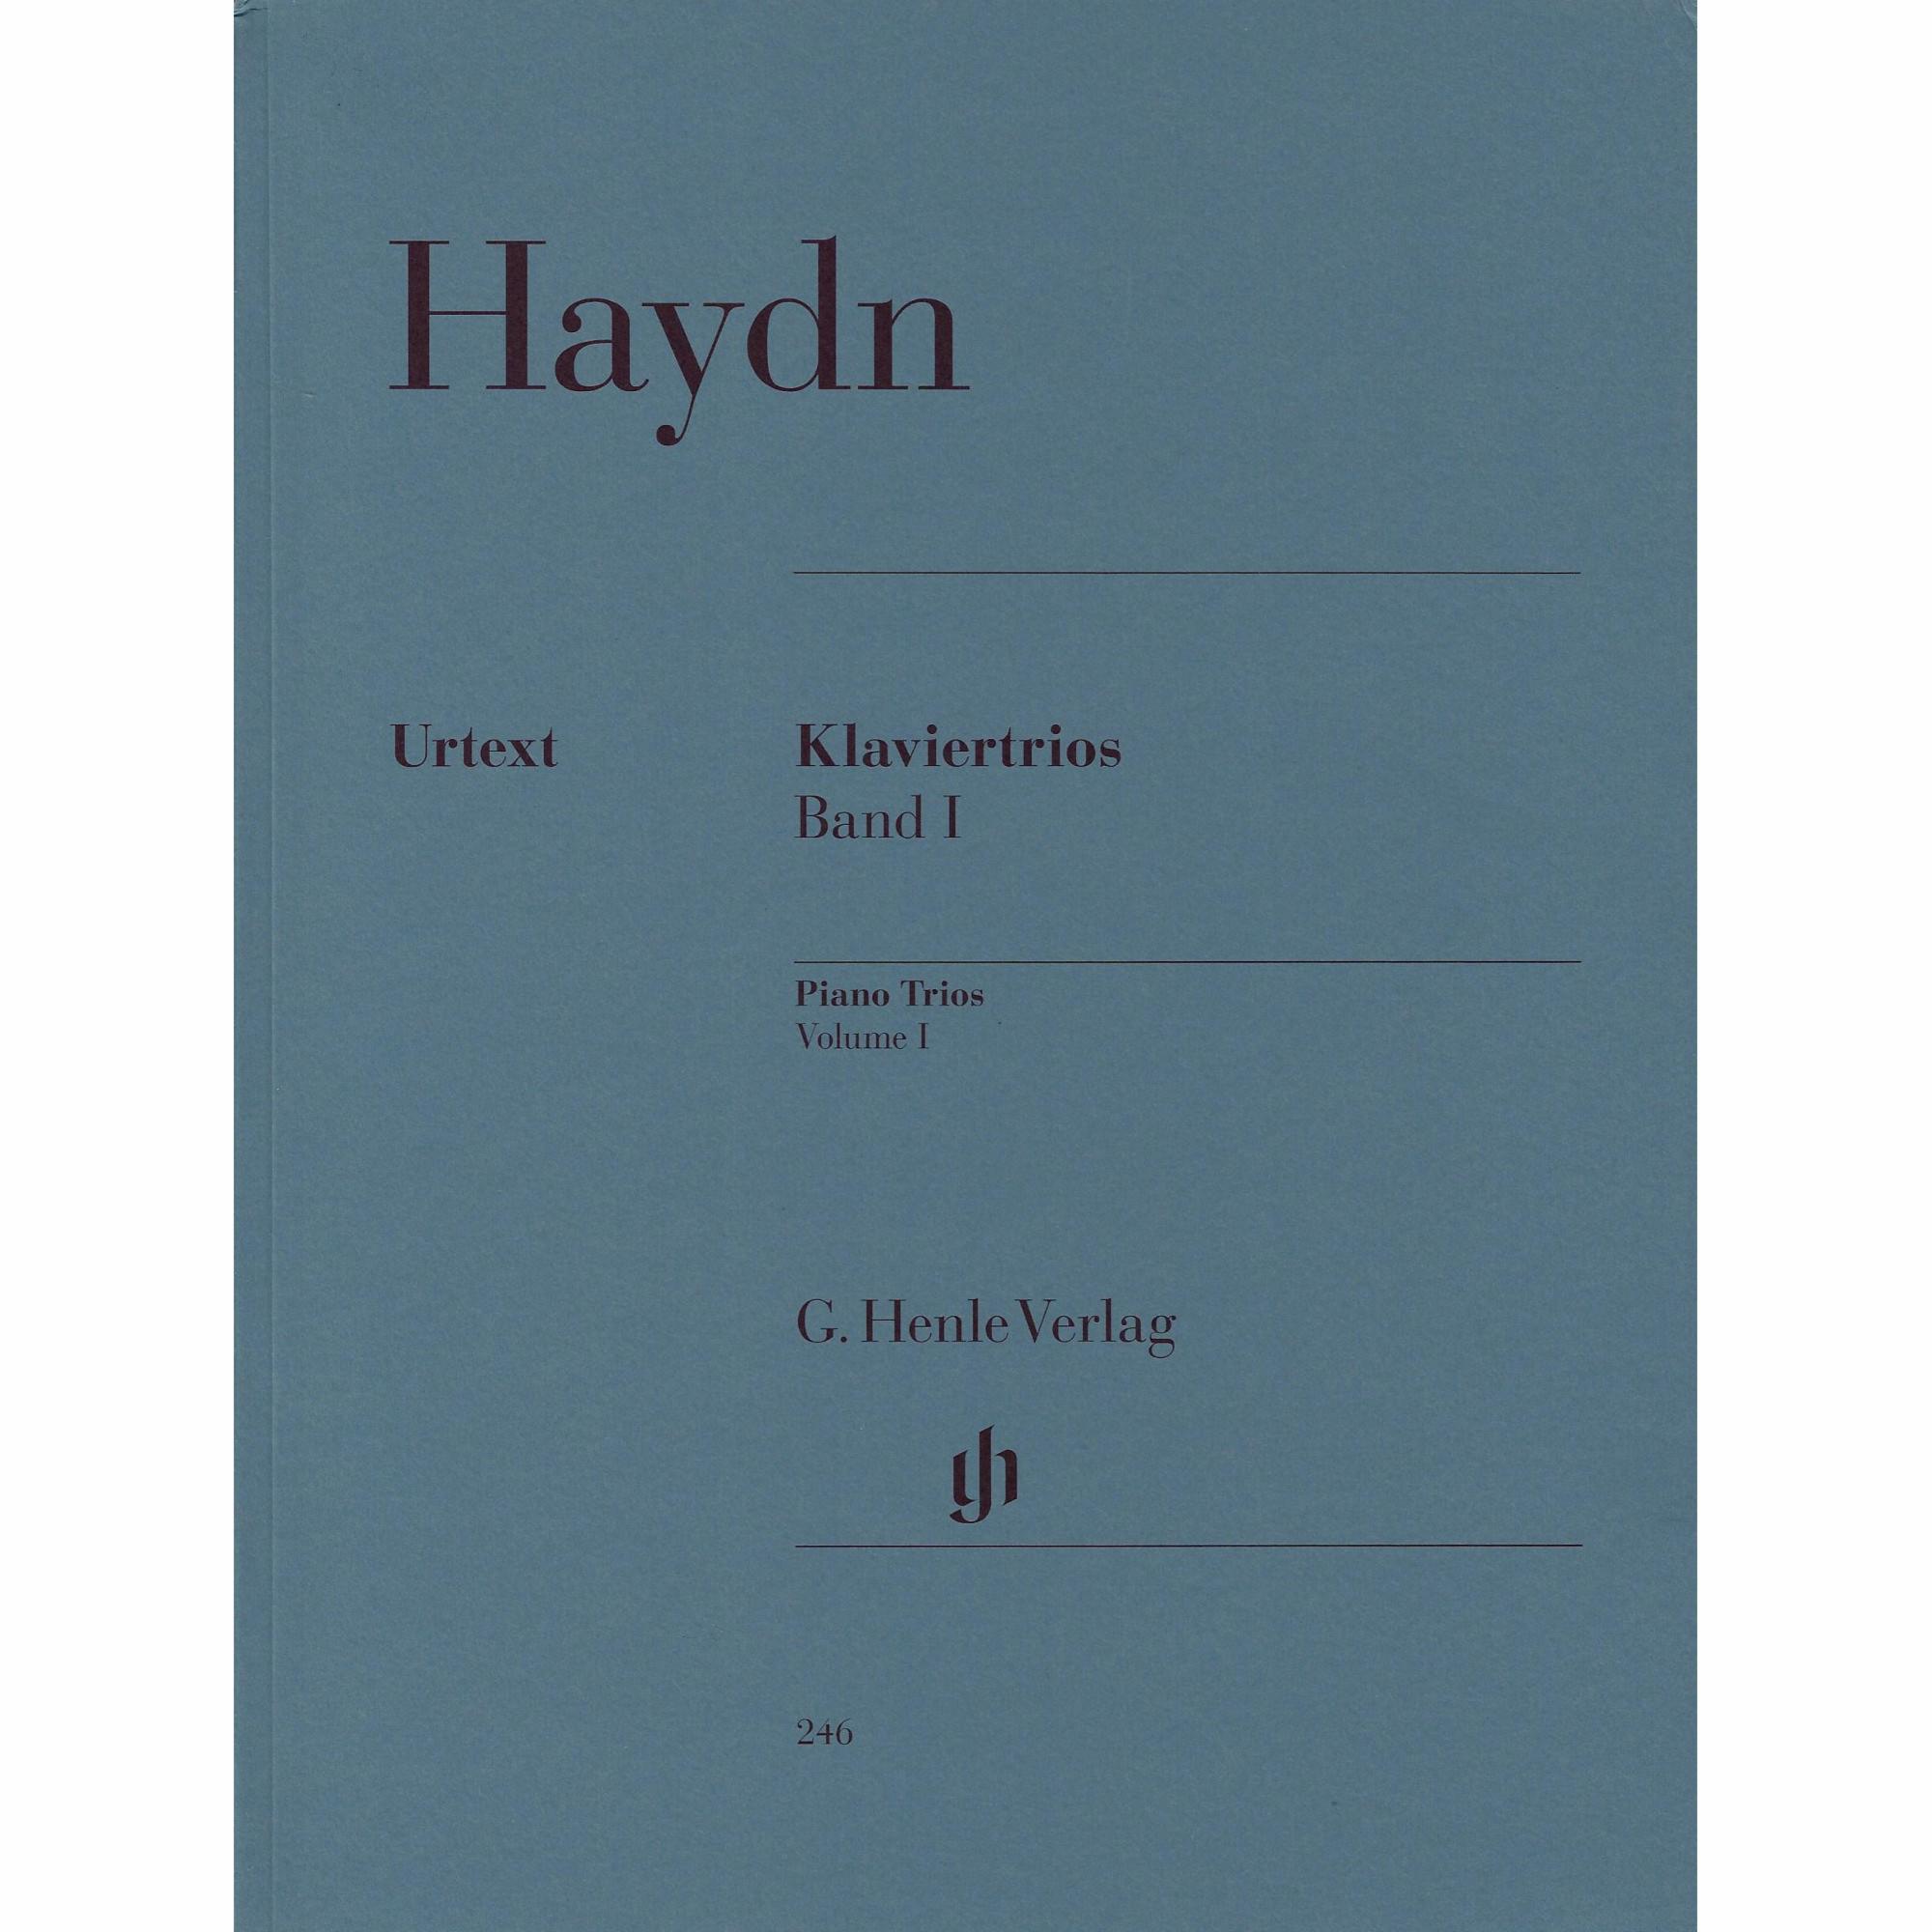 Haydn -- Piano Trios, Volumes I-V